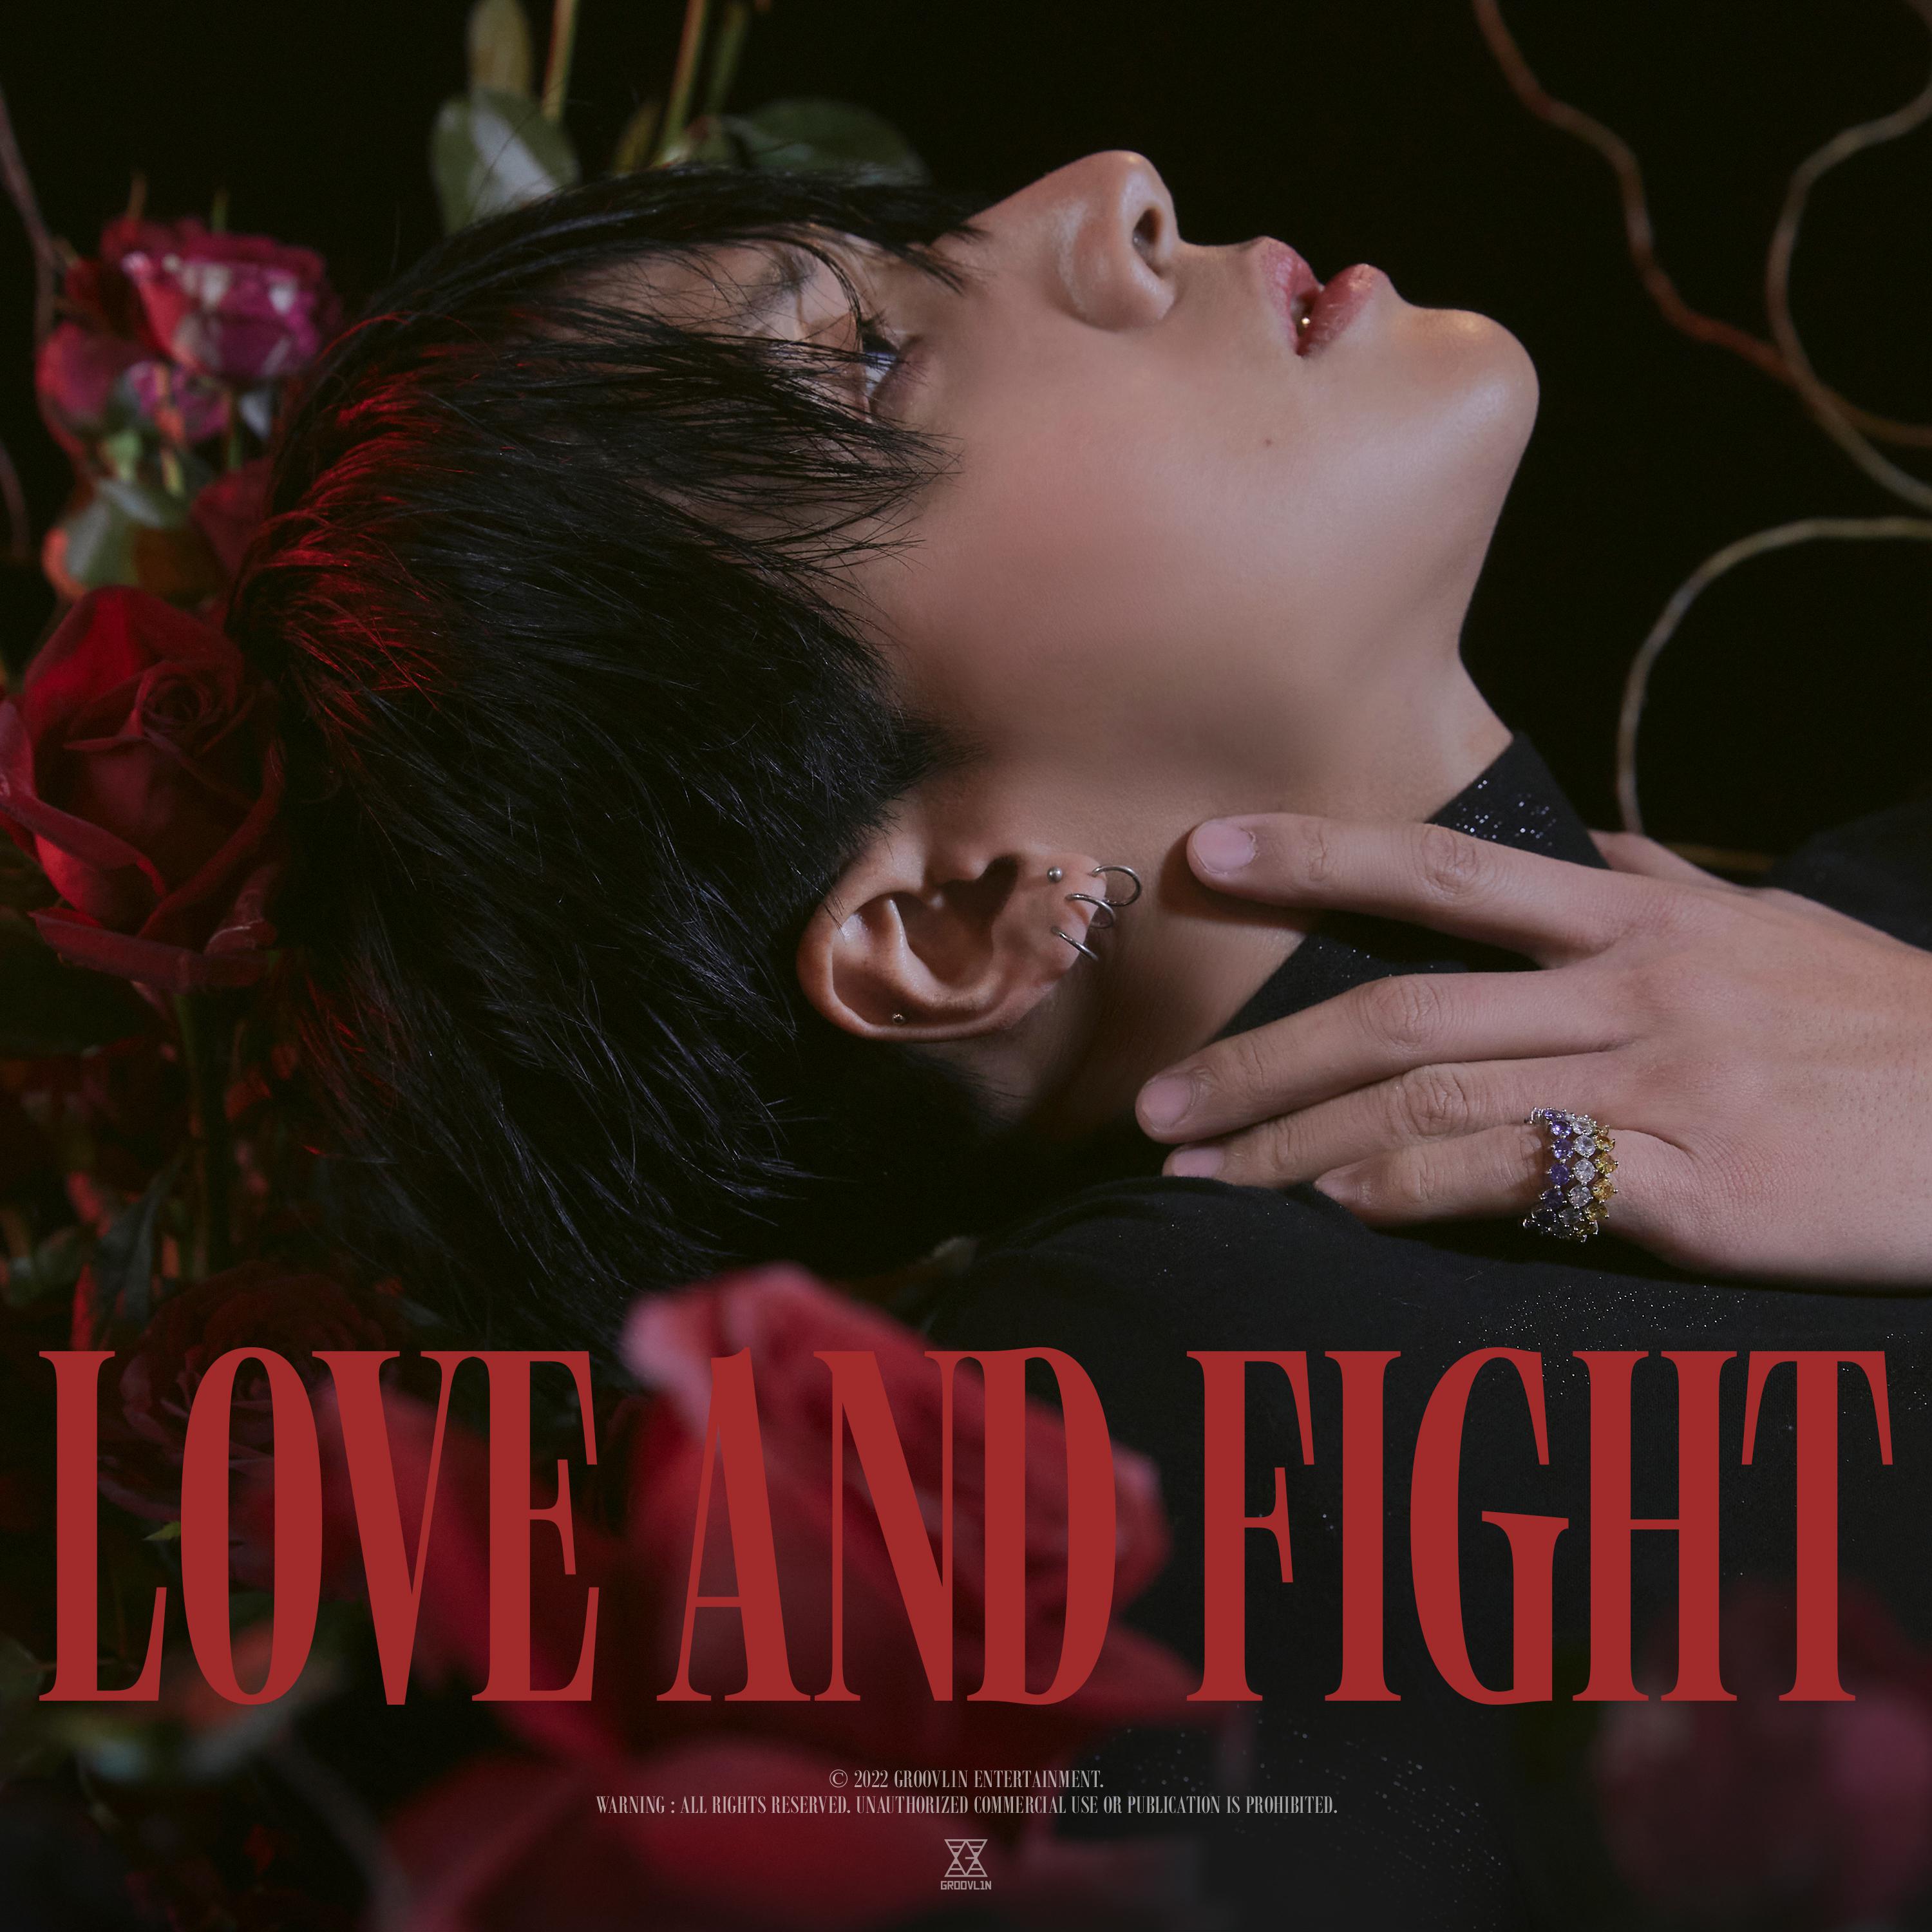 GUNS歌词 歌手Ravi-专辑LOVE & FIGHT-单曲《GUNS》LRC歌词下载